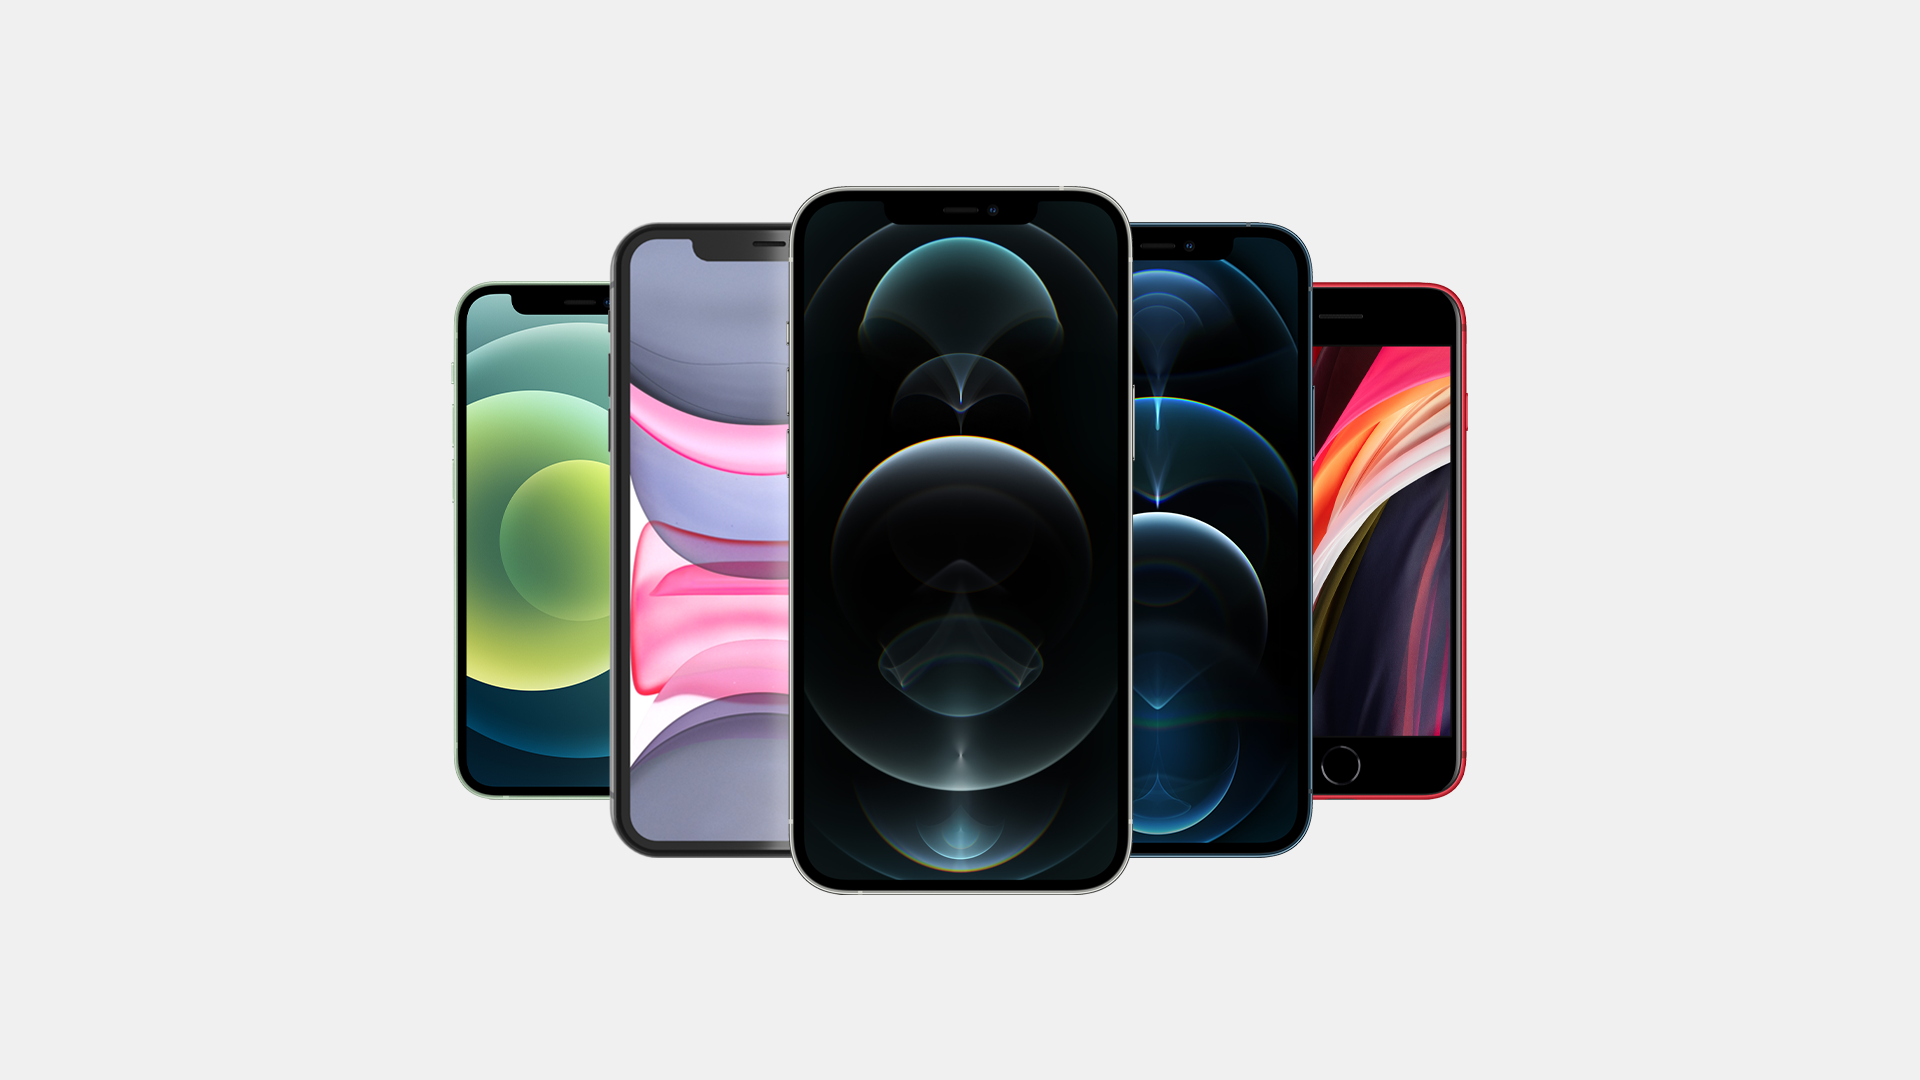 Olika iPhone med bland annat iPhone 12 och iPhone SE i olika färger